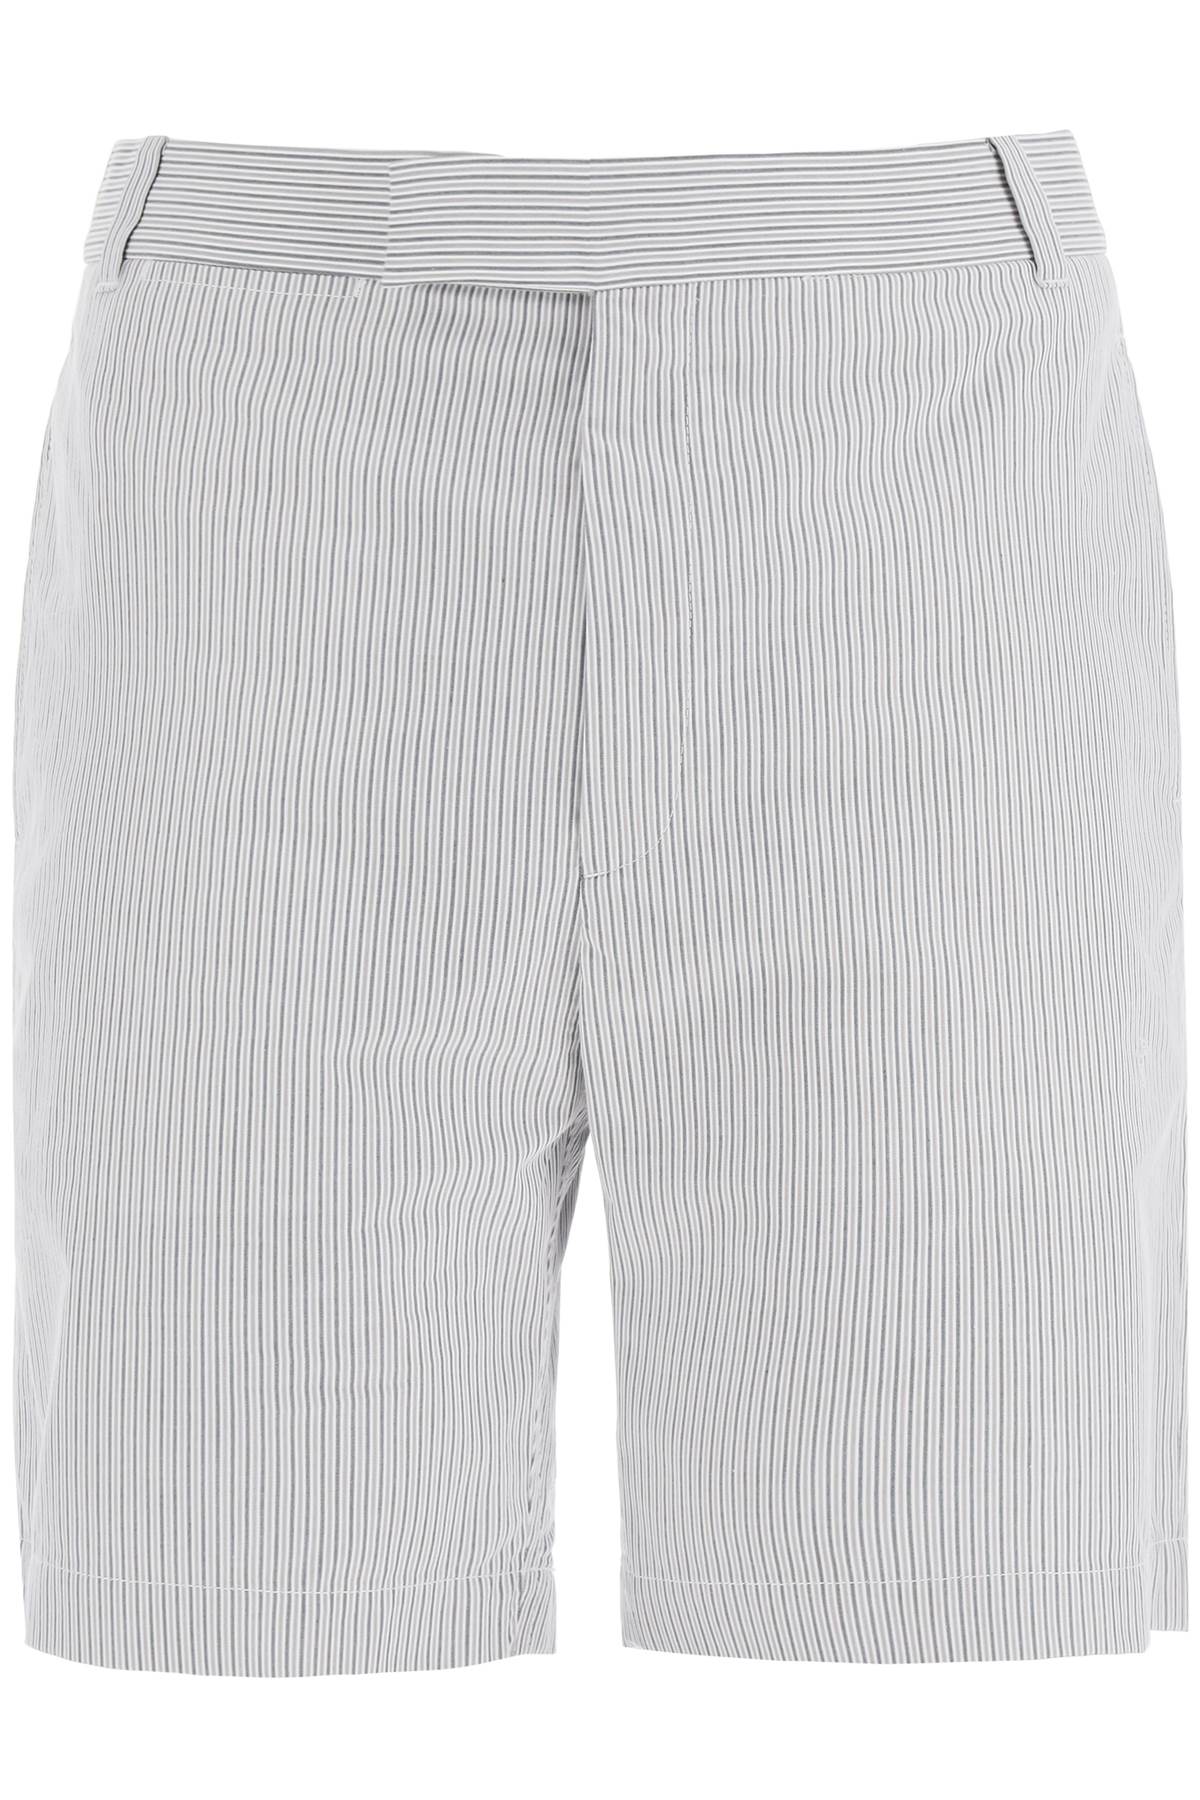 striped cotton bermuda shorts for men-0